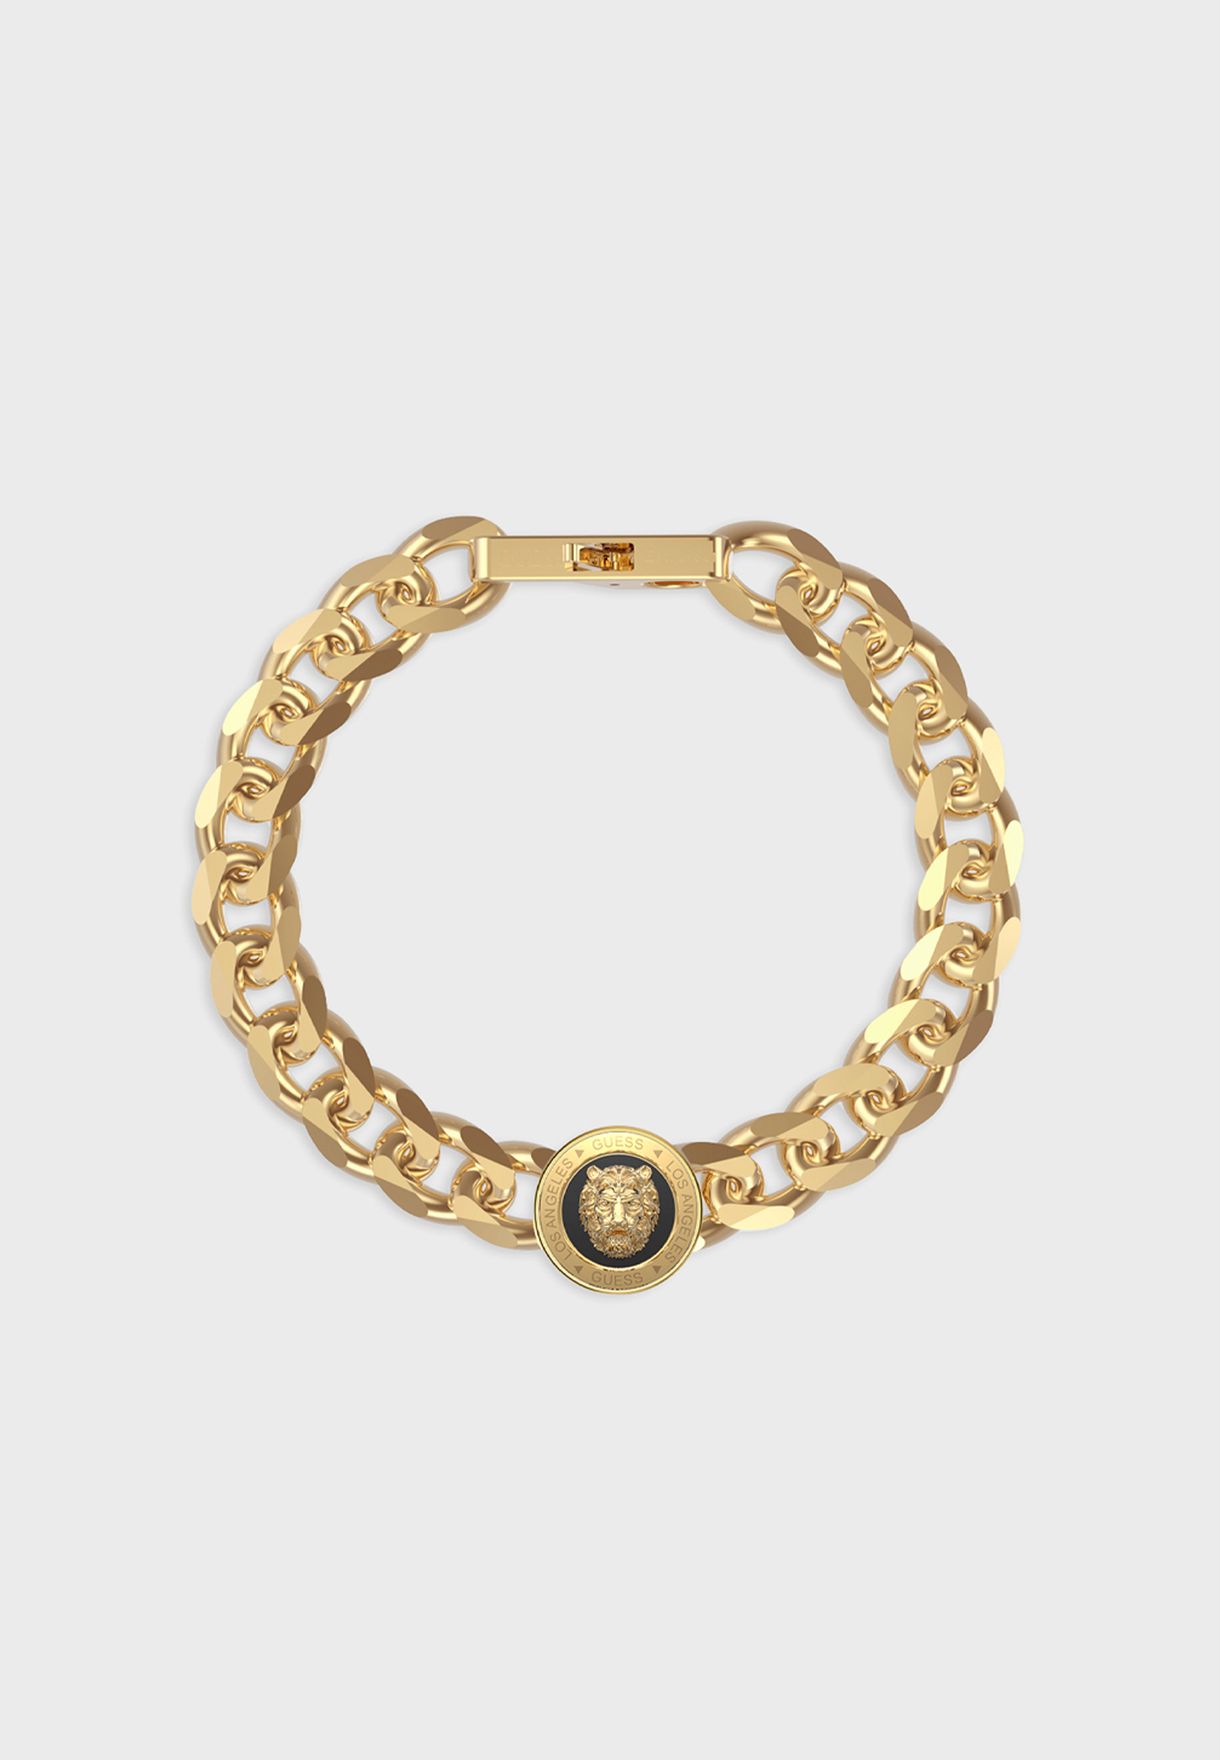 Dubai Bracelet For Men Women 24k Gold Color Width 21cm 16mm Hiphop Chain  Bracelet Ethiopianafricanarab Jewelry  Bracelets  AliExpress